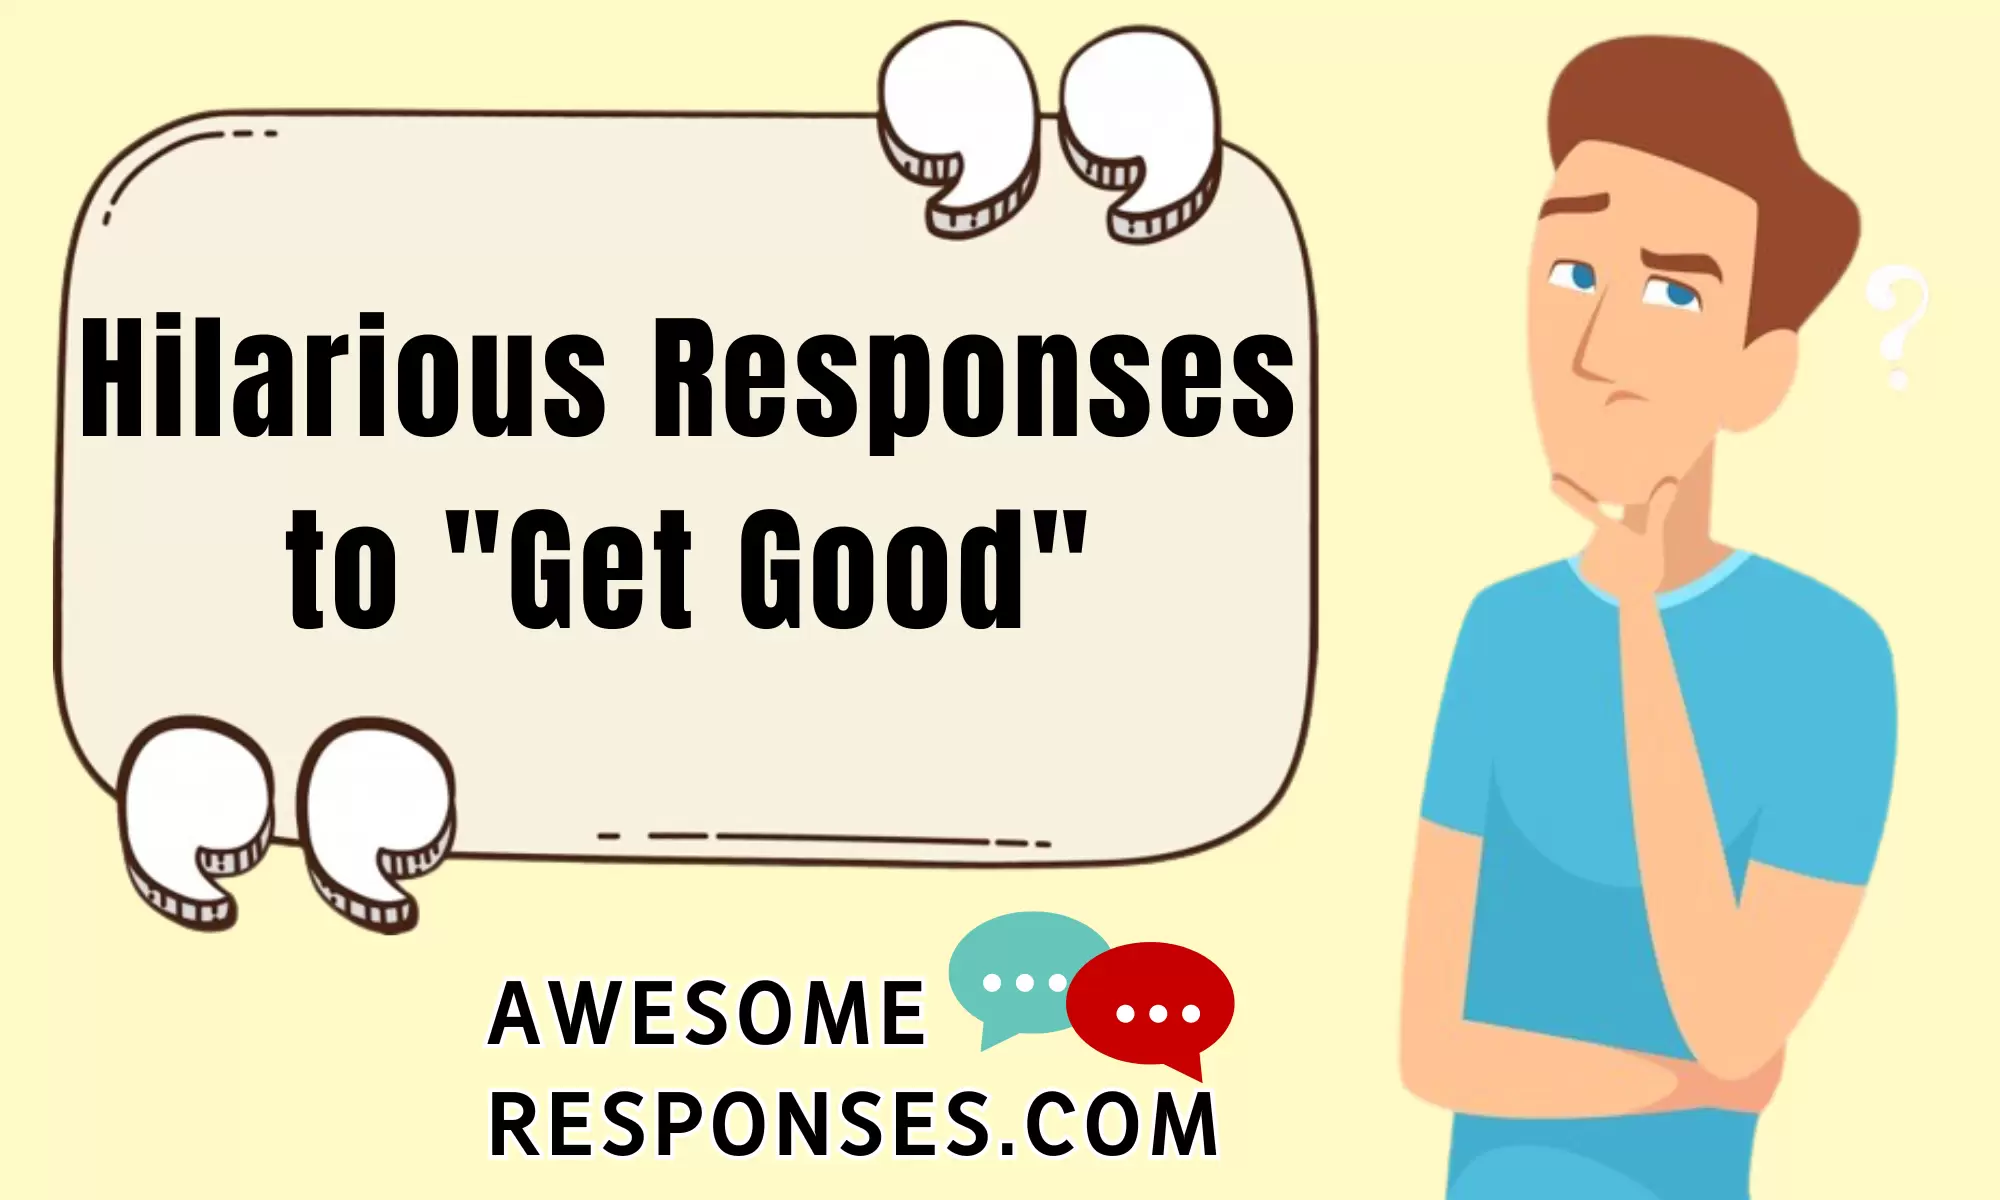 Hilarious Responses to "Get Good"